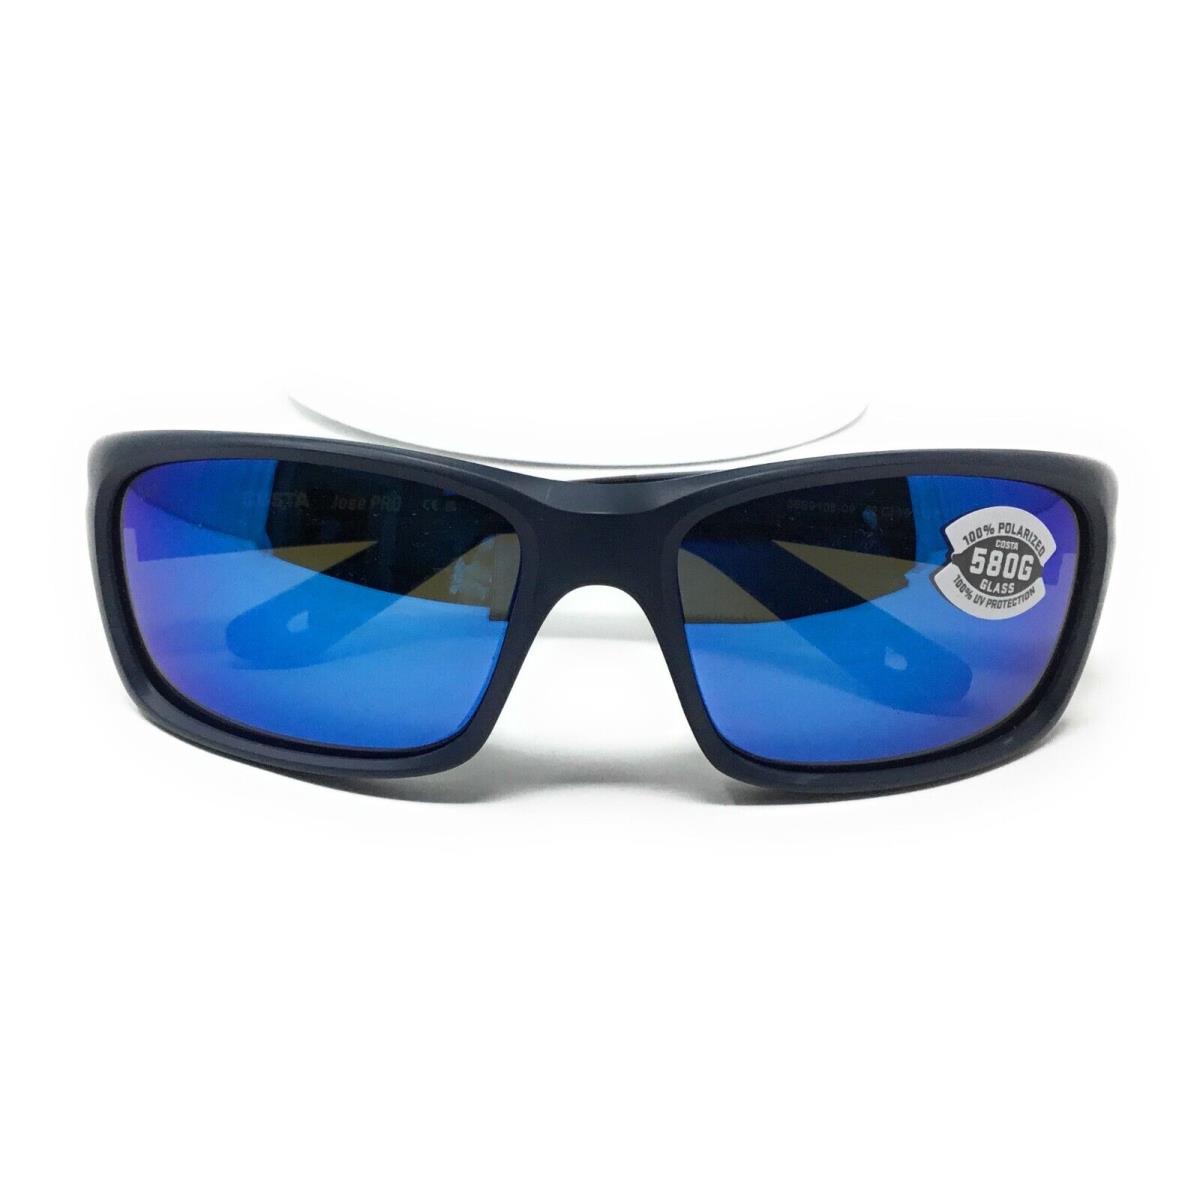 Costa Del Mar Jose Mens Blue Mirror Polarized Sunglasses 6S9106 910609 62-16 - Frame: Midnight Blue, Lens: Blue Mirror